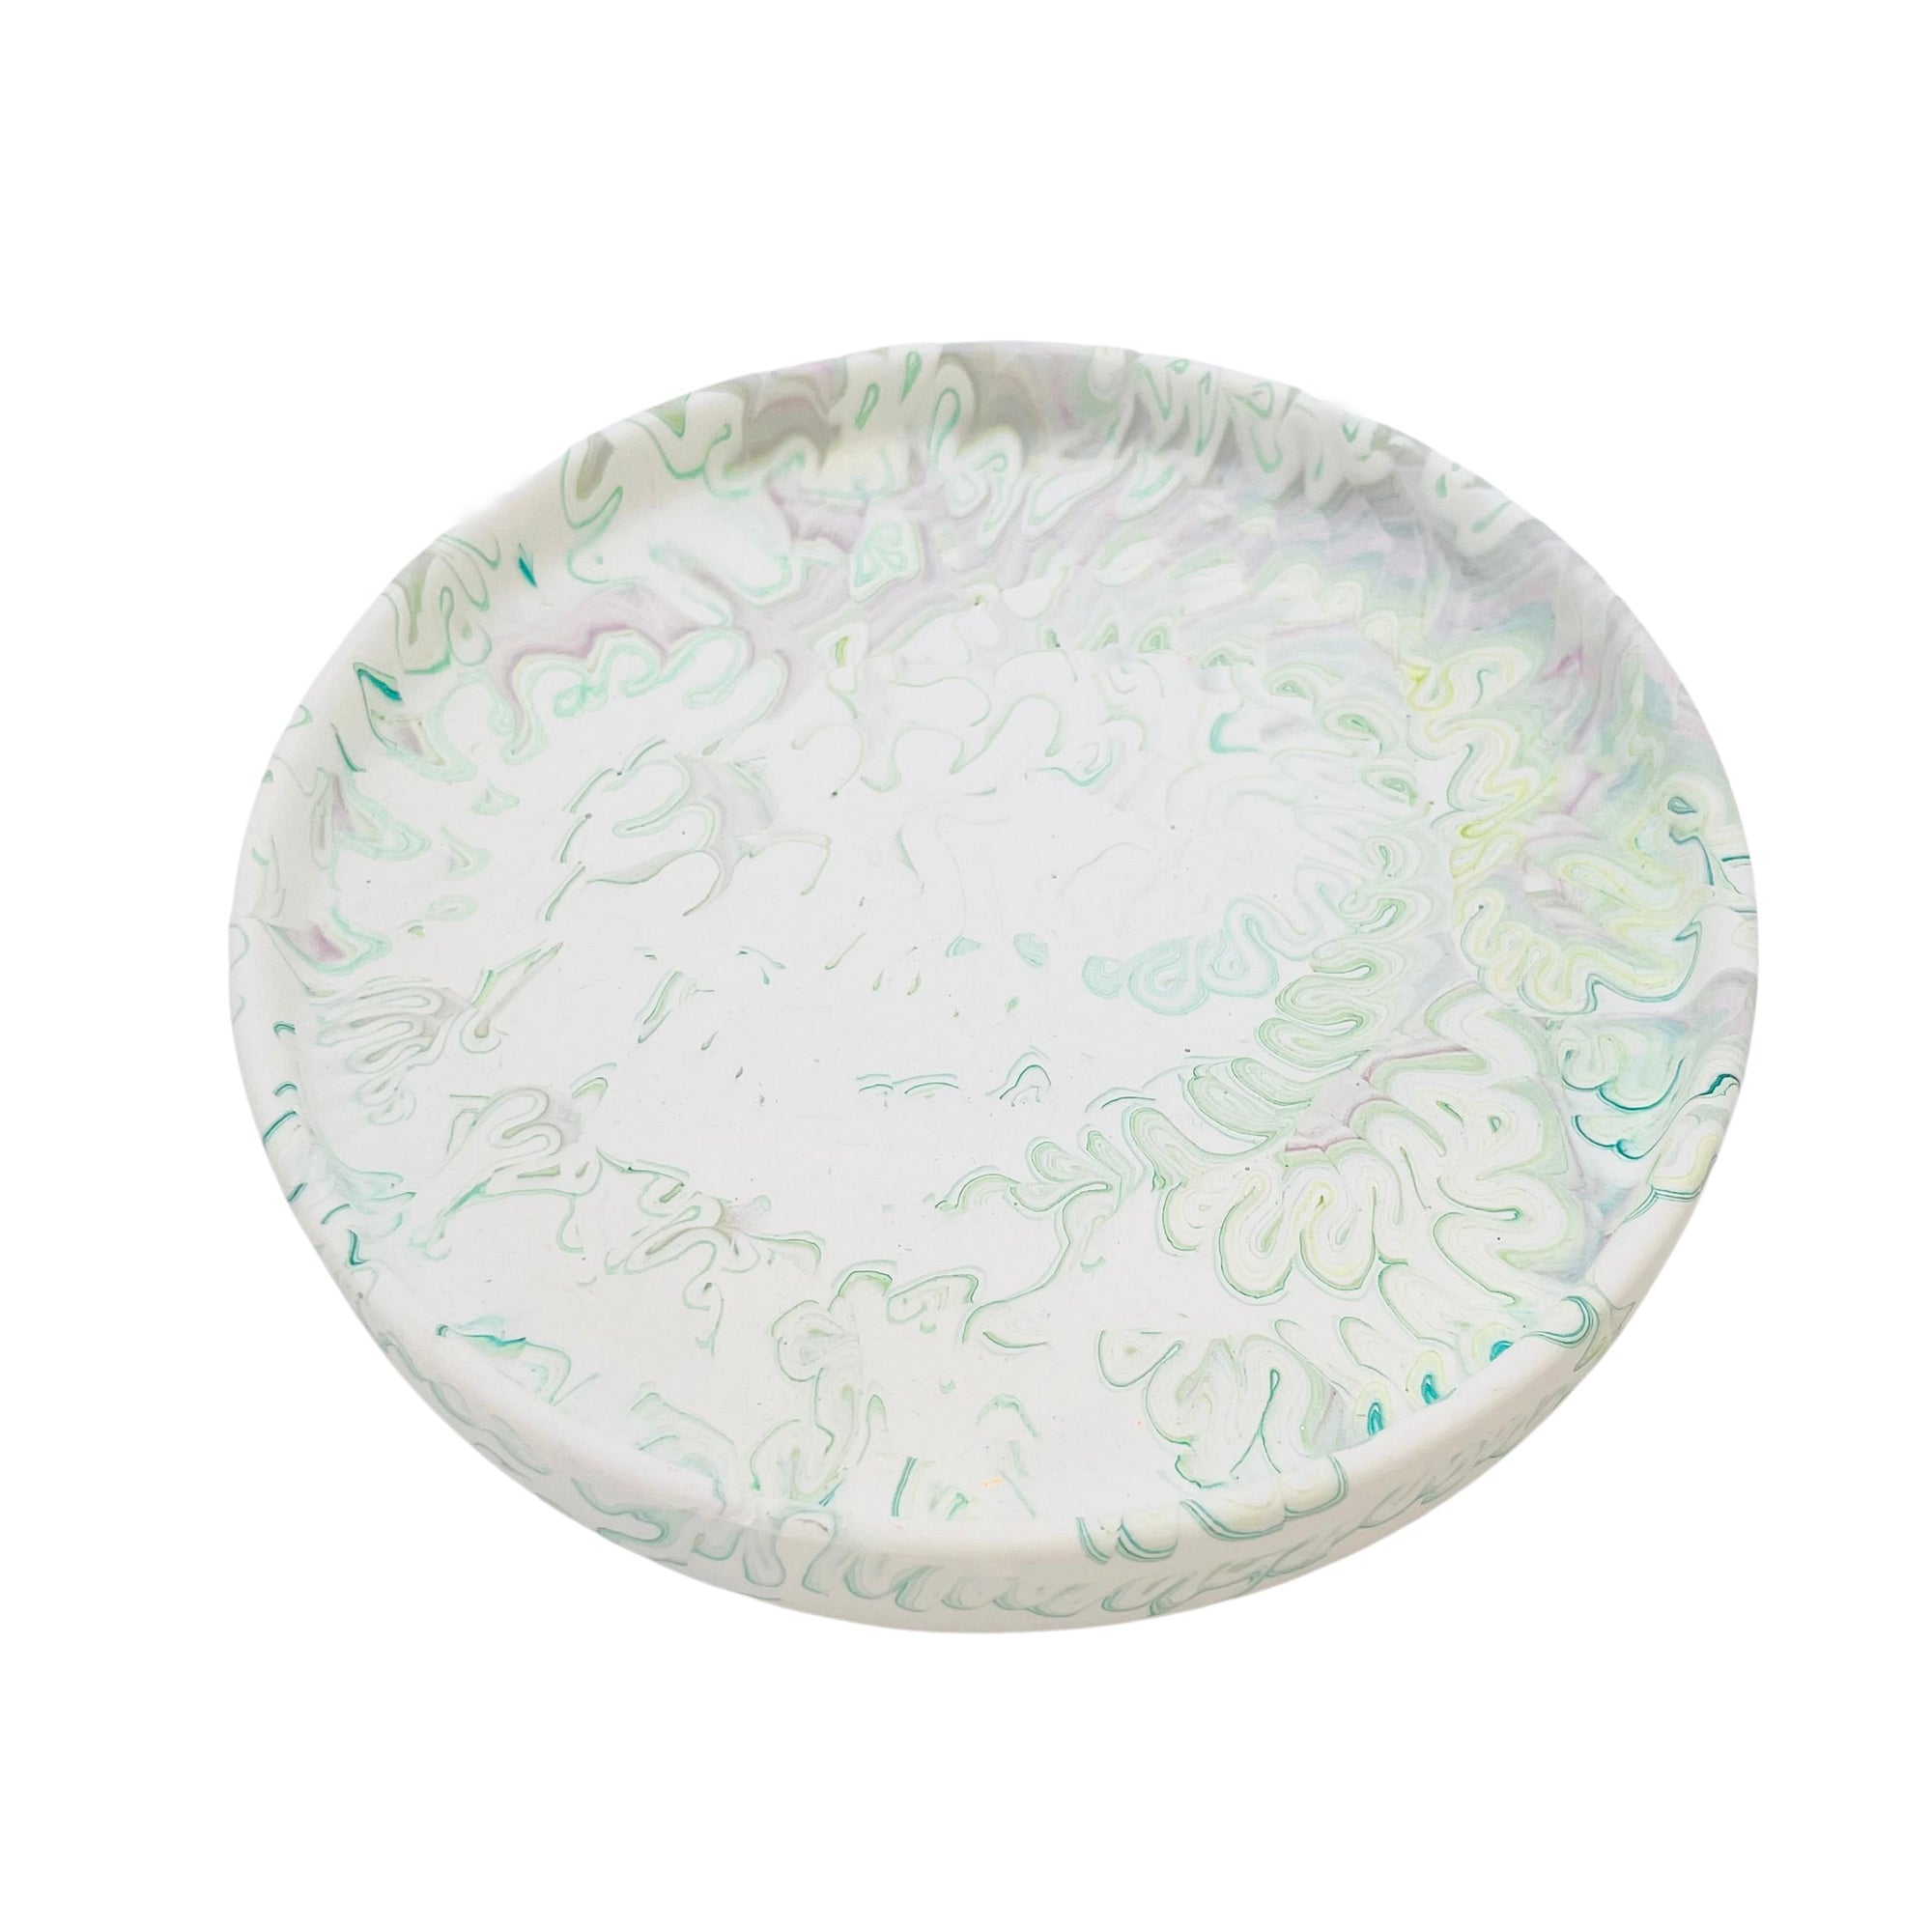 A circular Jesmonite trinket tray measuring 15.4cm in diameter marbled with sage green  pigment.